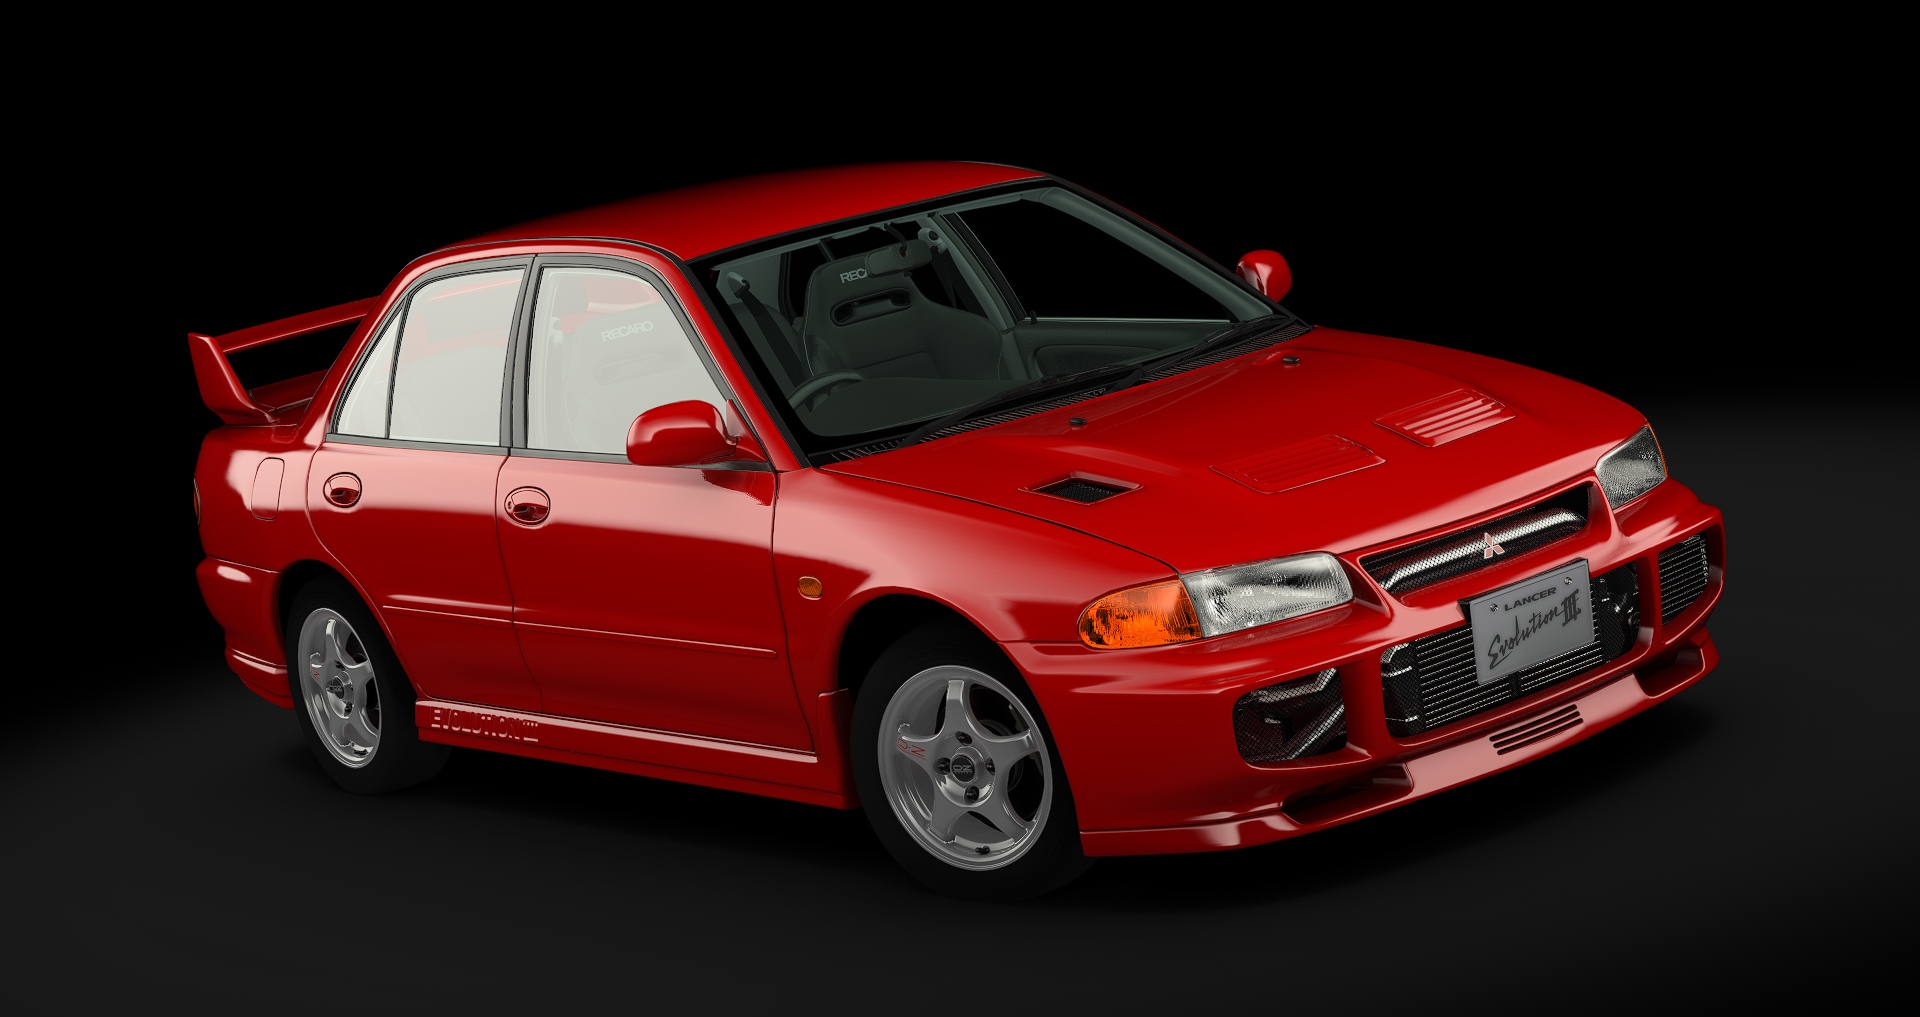 Mitsubishi Lancer Evolution III GSR Preview Image